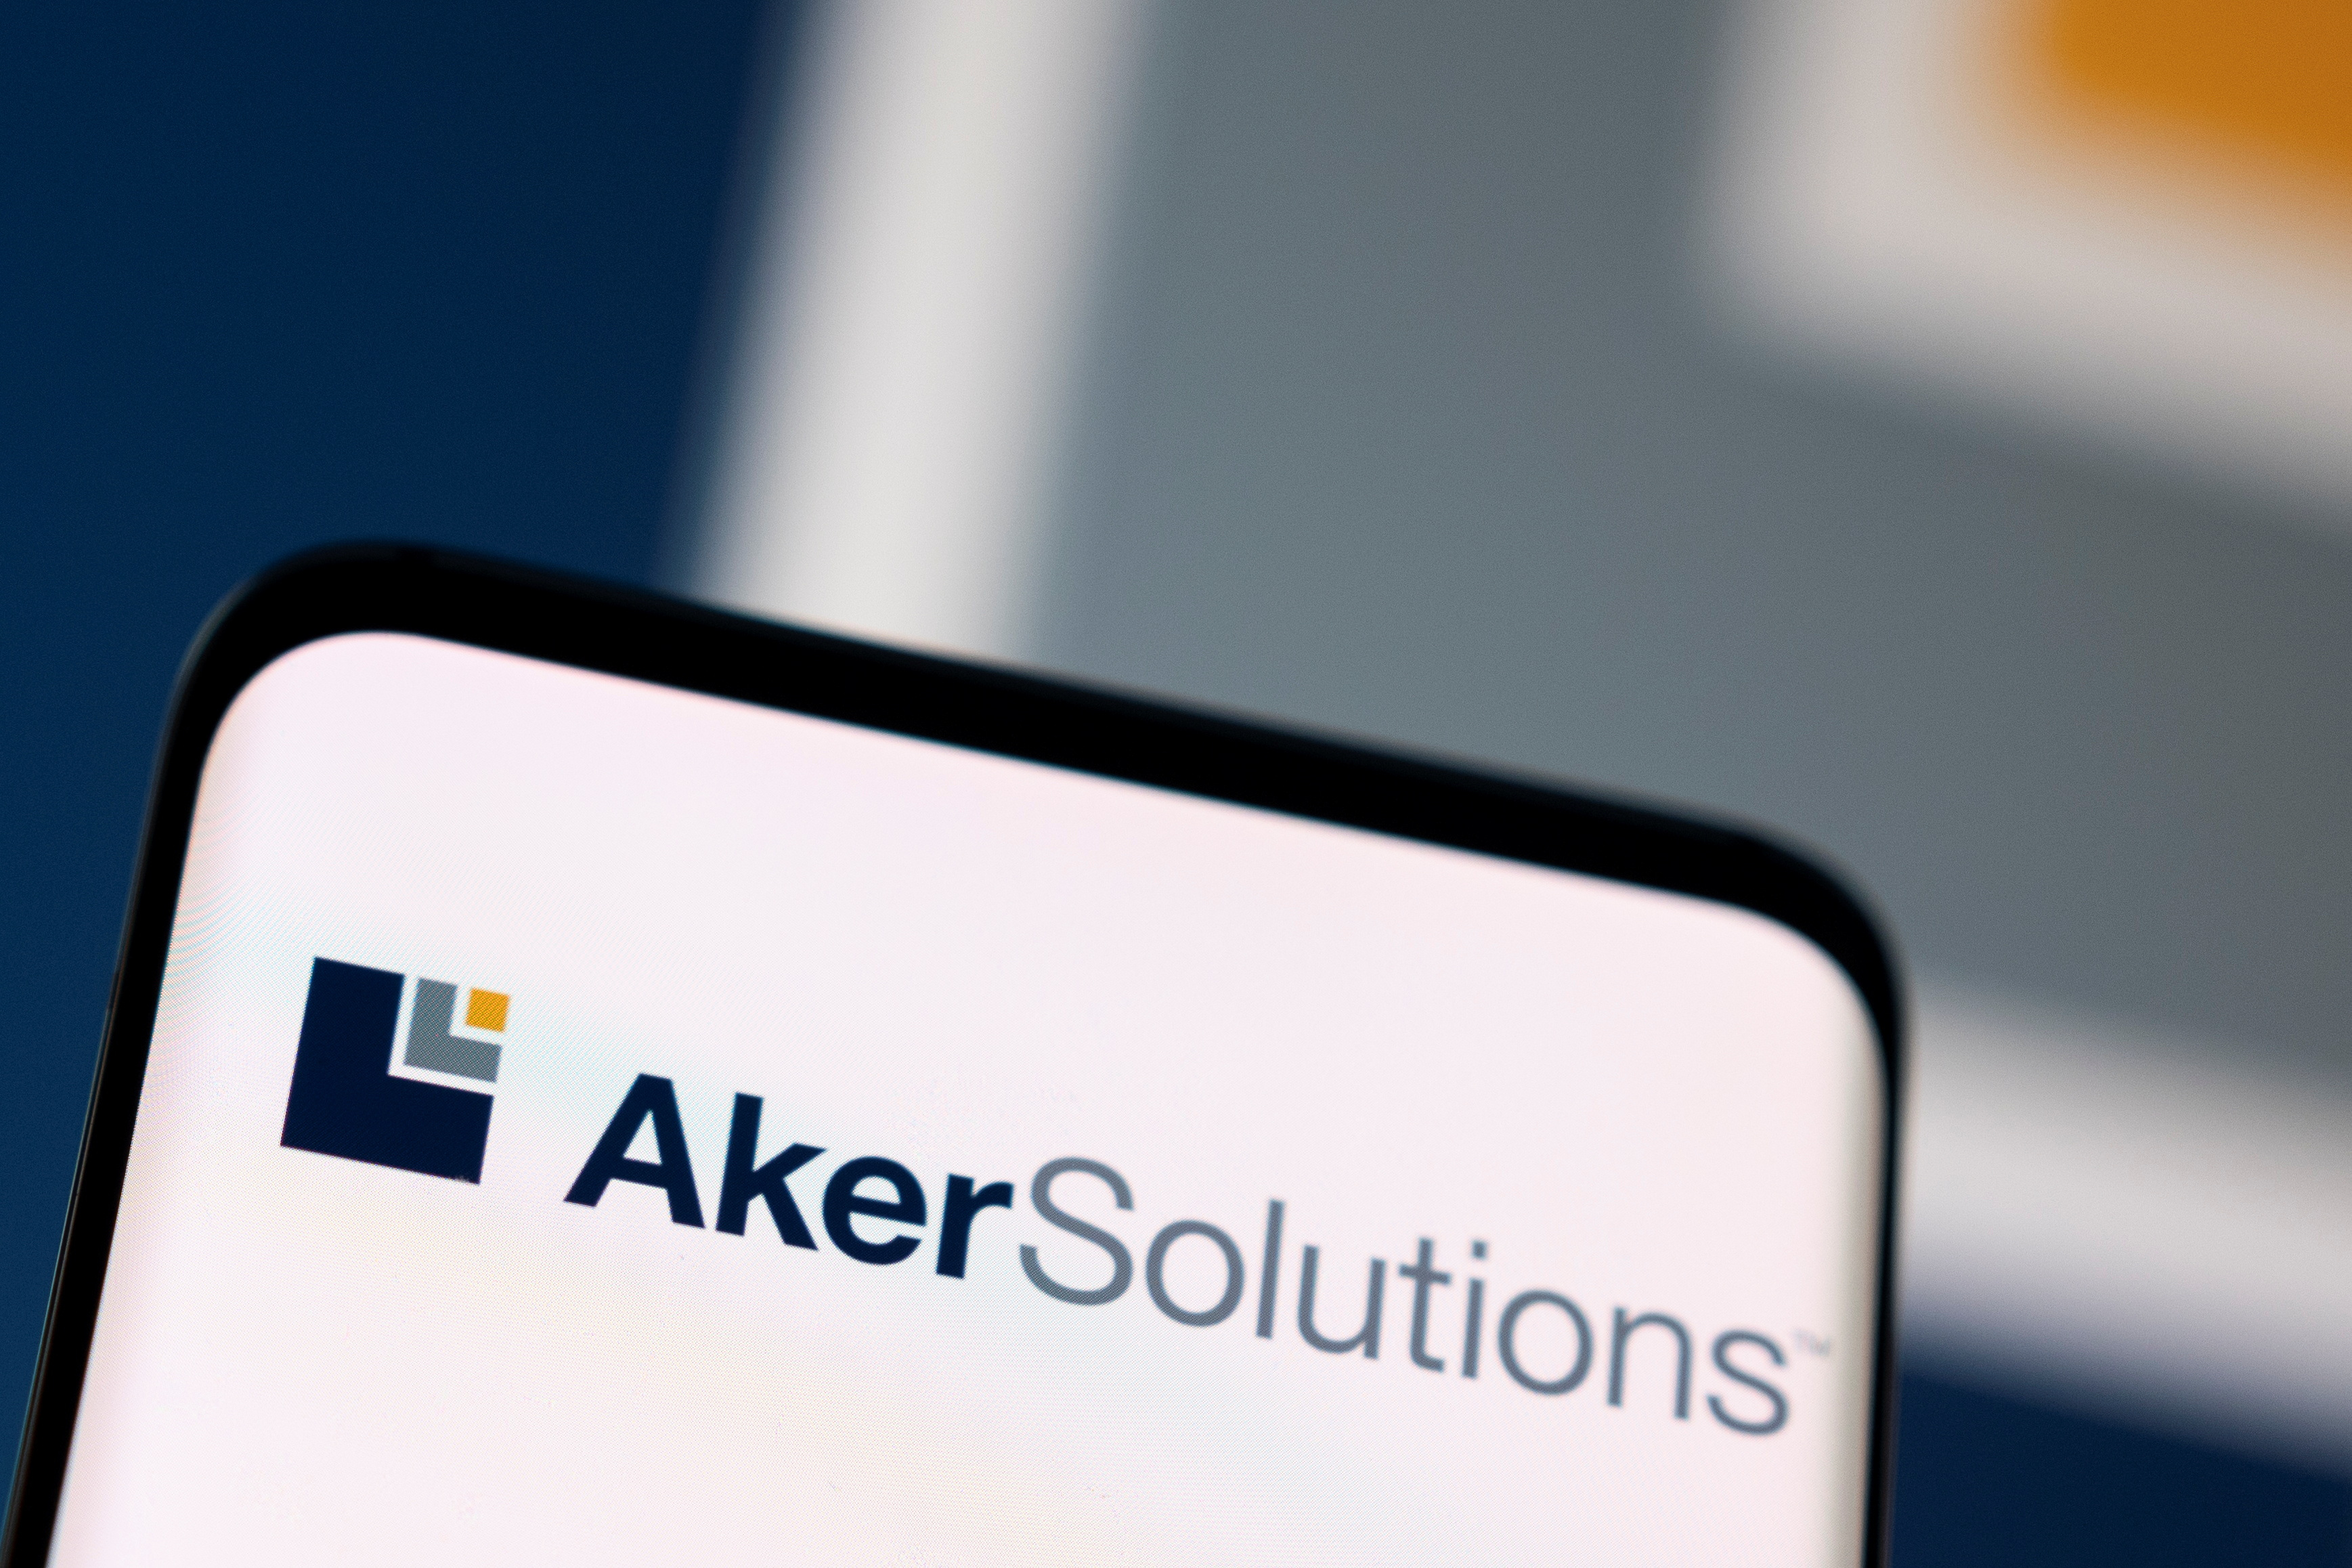 Illustration shows Aker Solutions logo